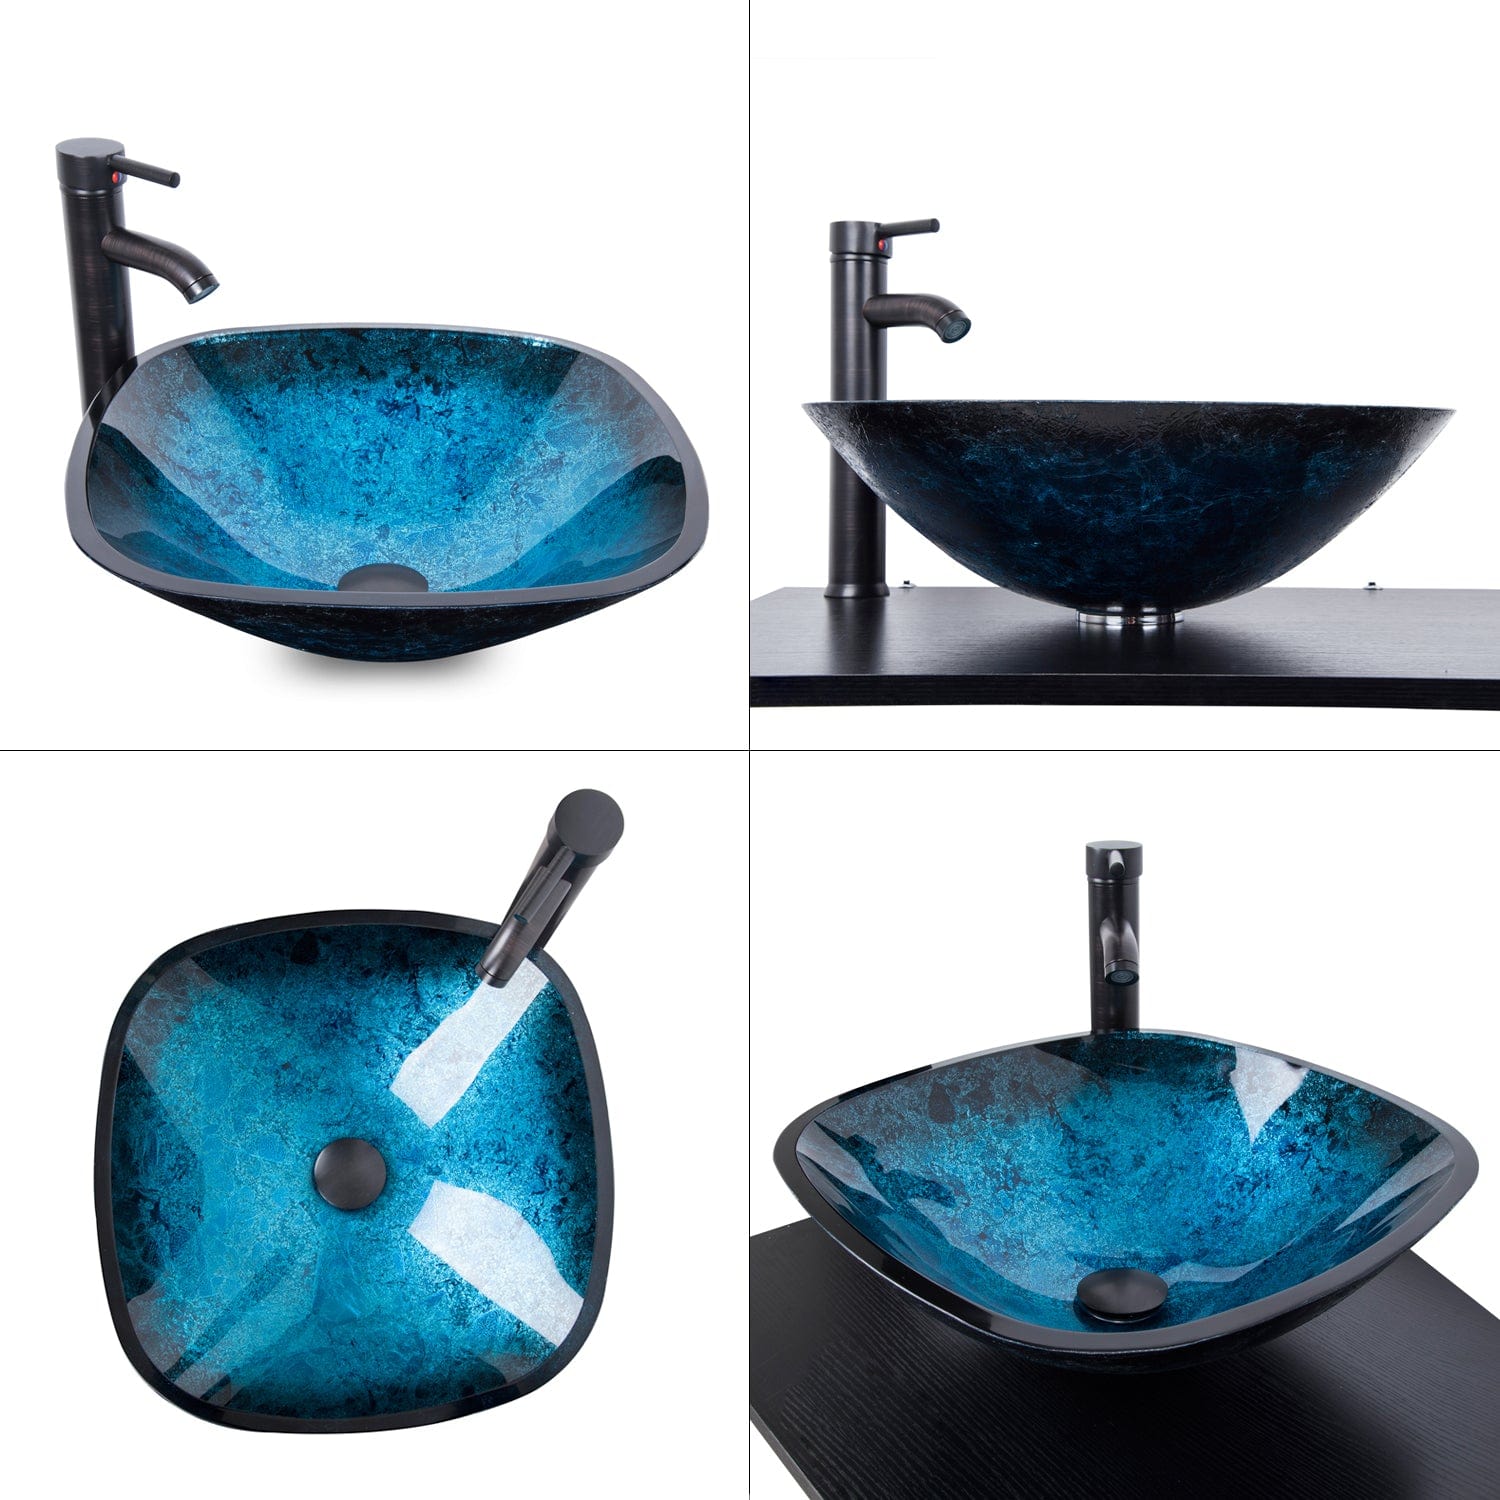 Four angle views of Elecwish Vessel Sinks Bathroom Glass Vessel Sink BA76